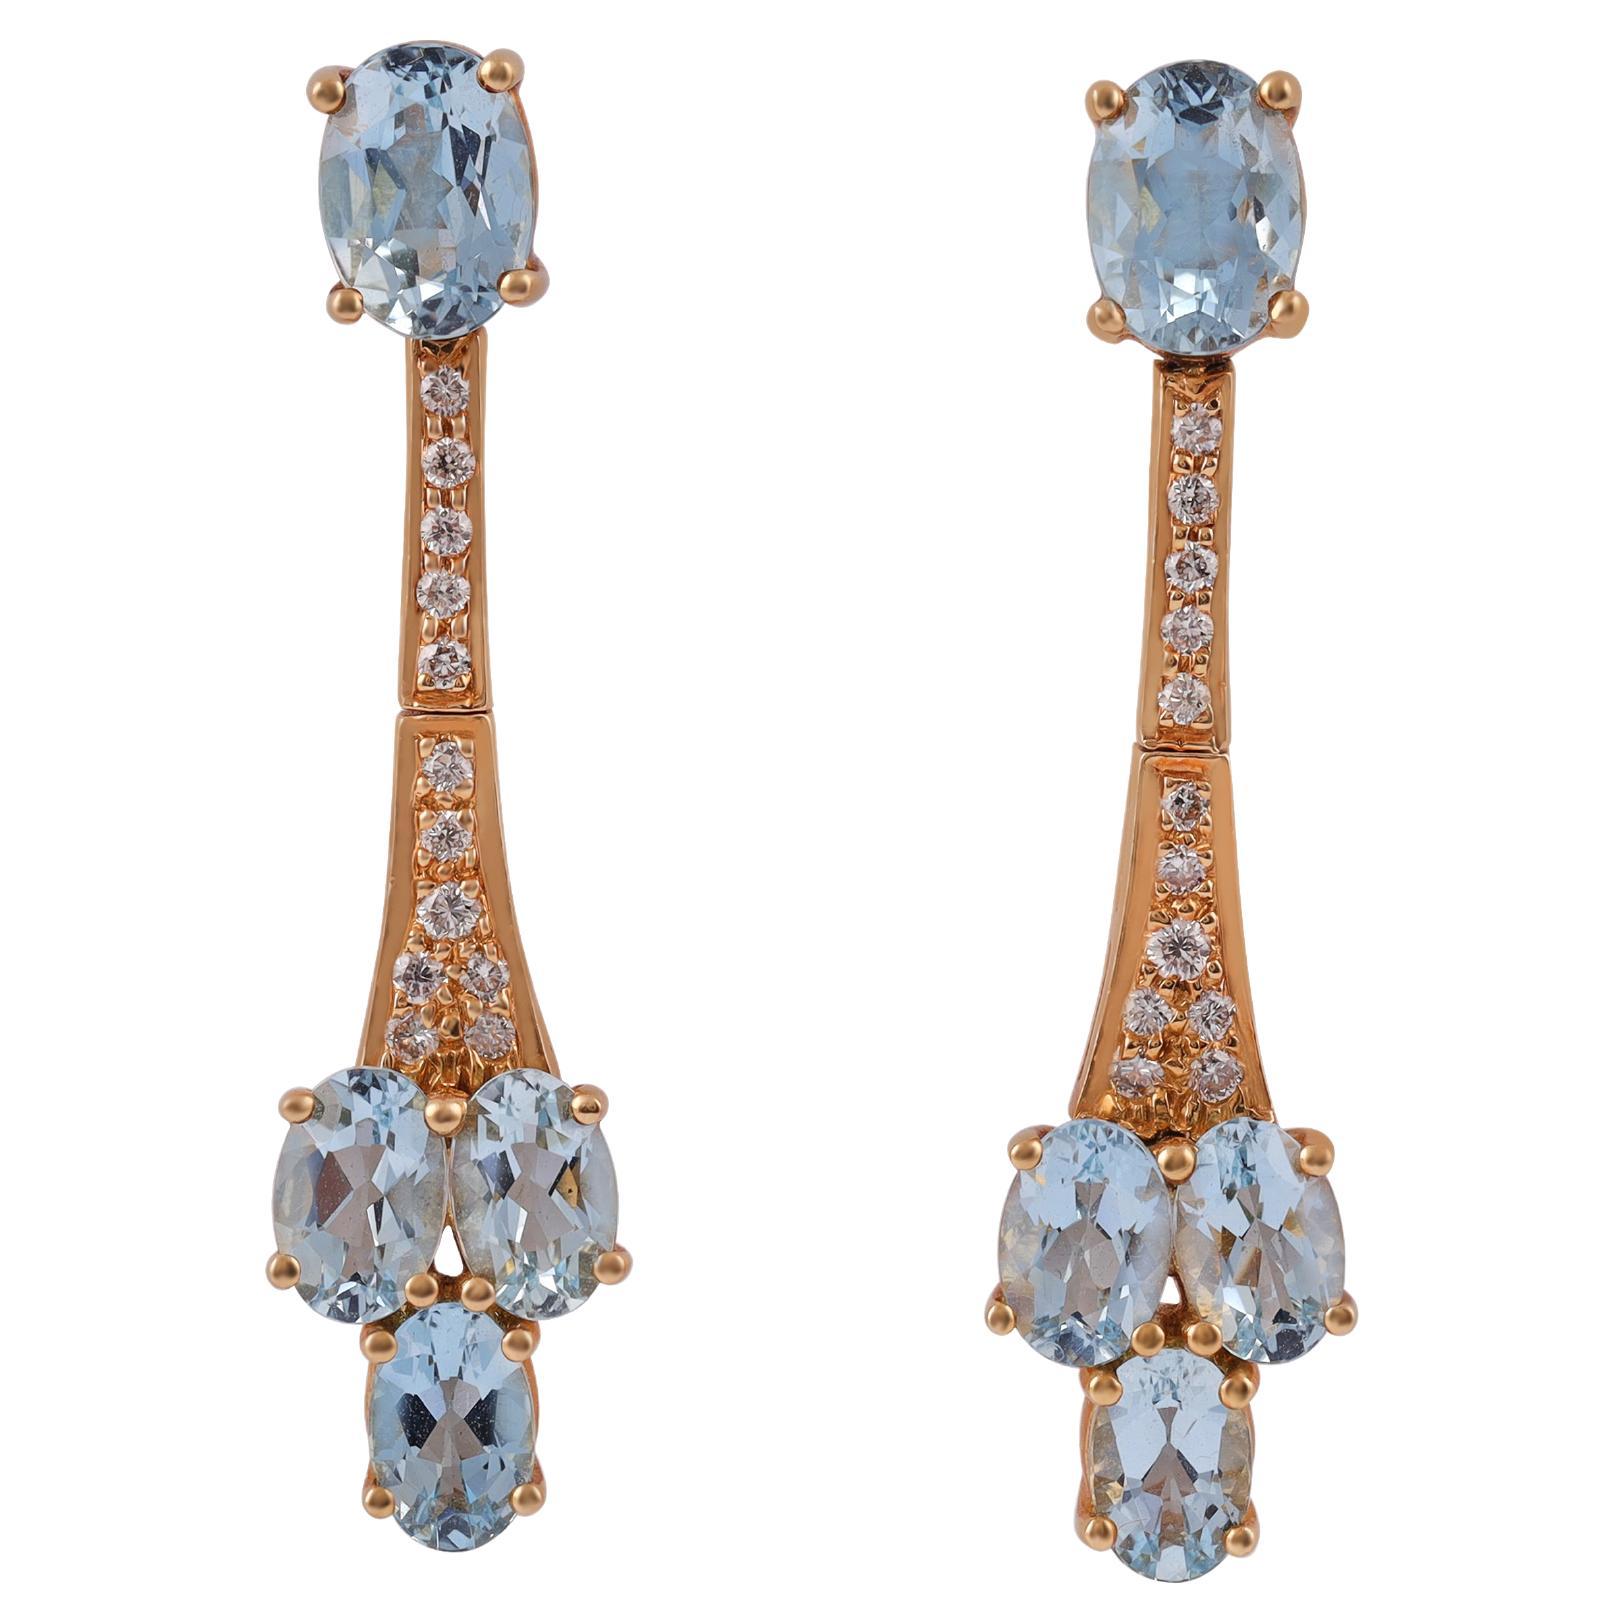 3.78 Carat Aquamarine & Diamonds Earrings in 18k Gold